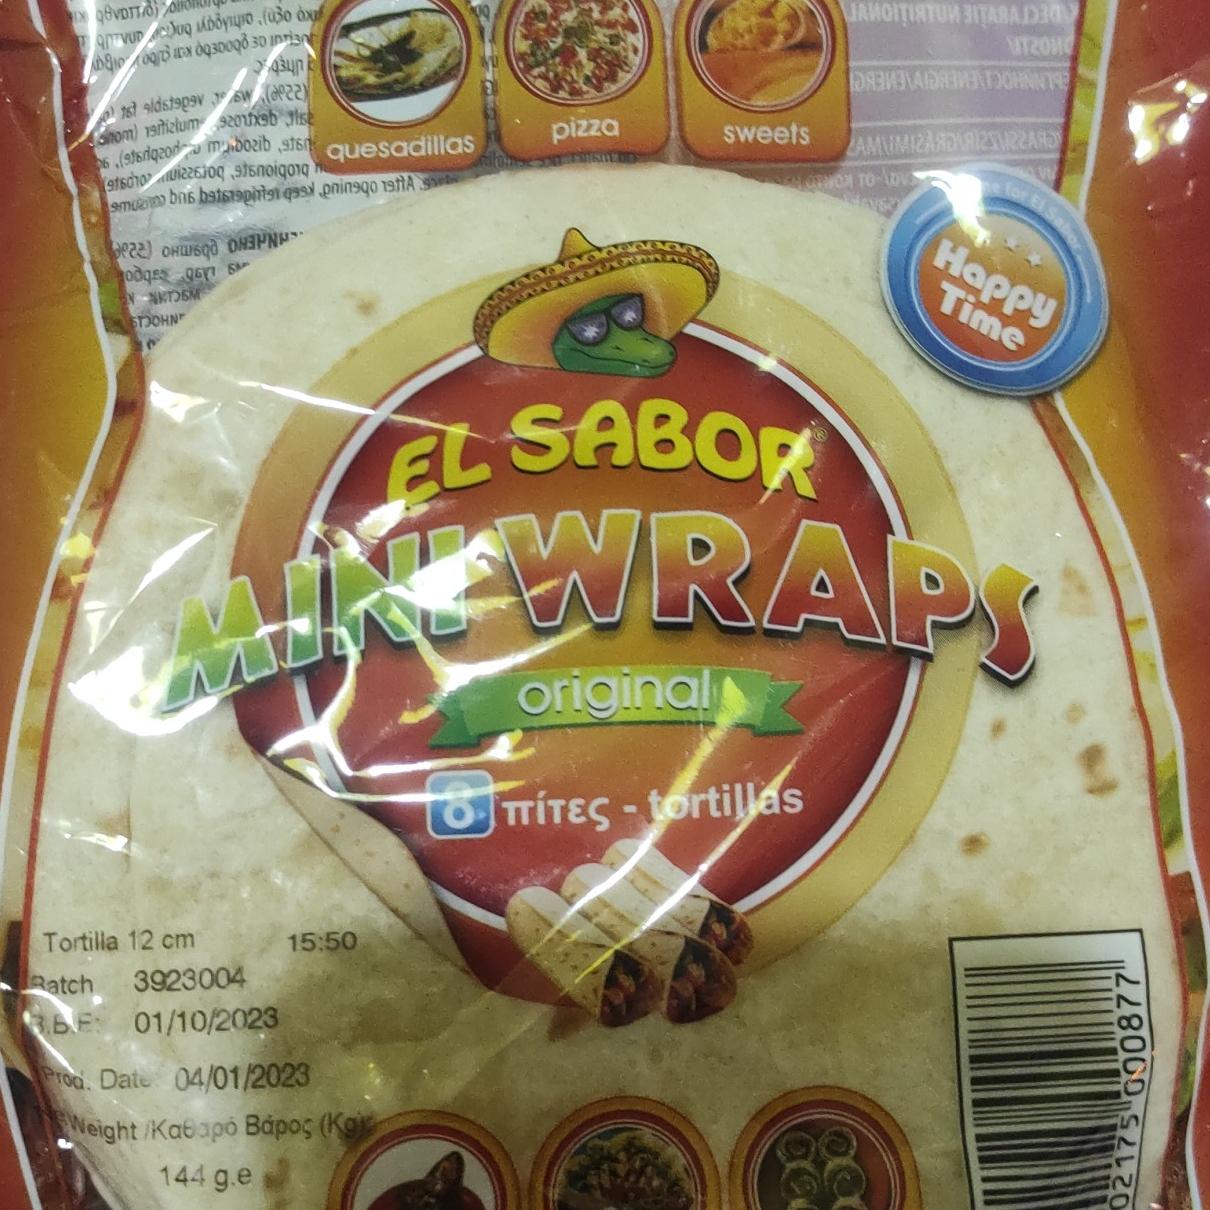 Képek - Big wraps original tortilla búzalisztből El Sabor